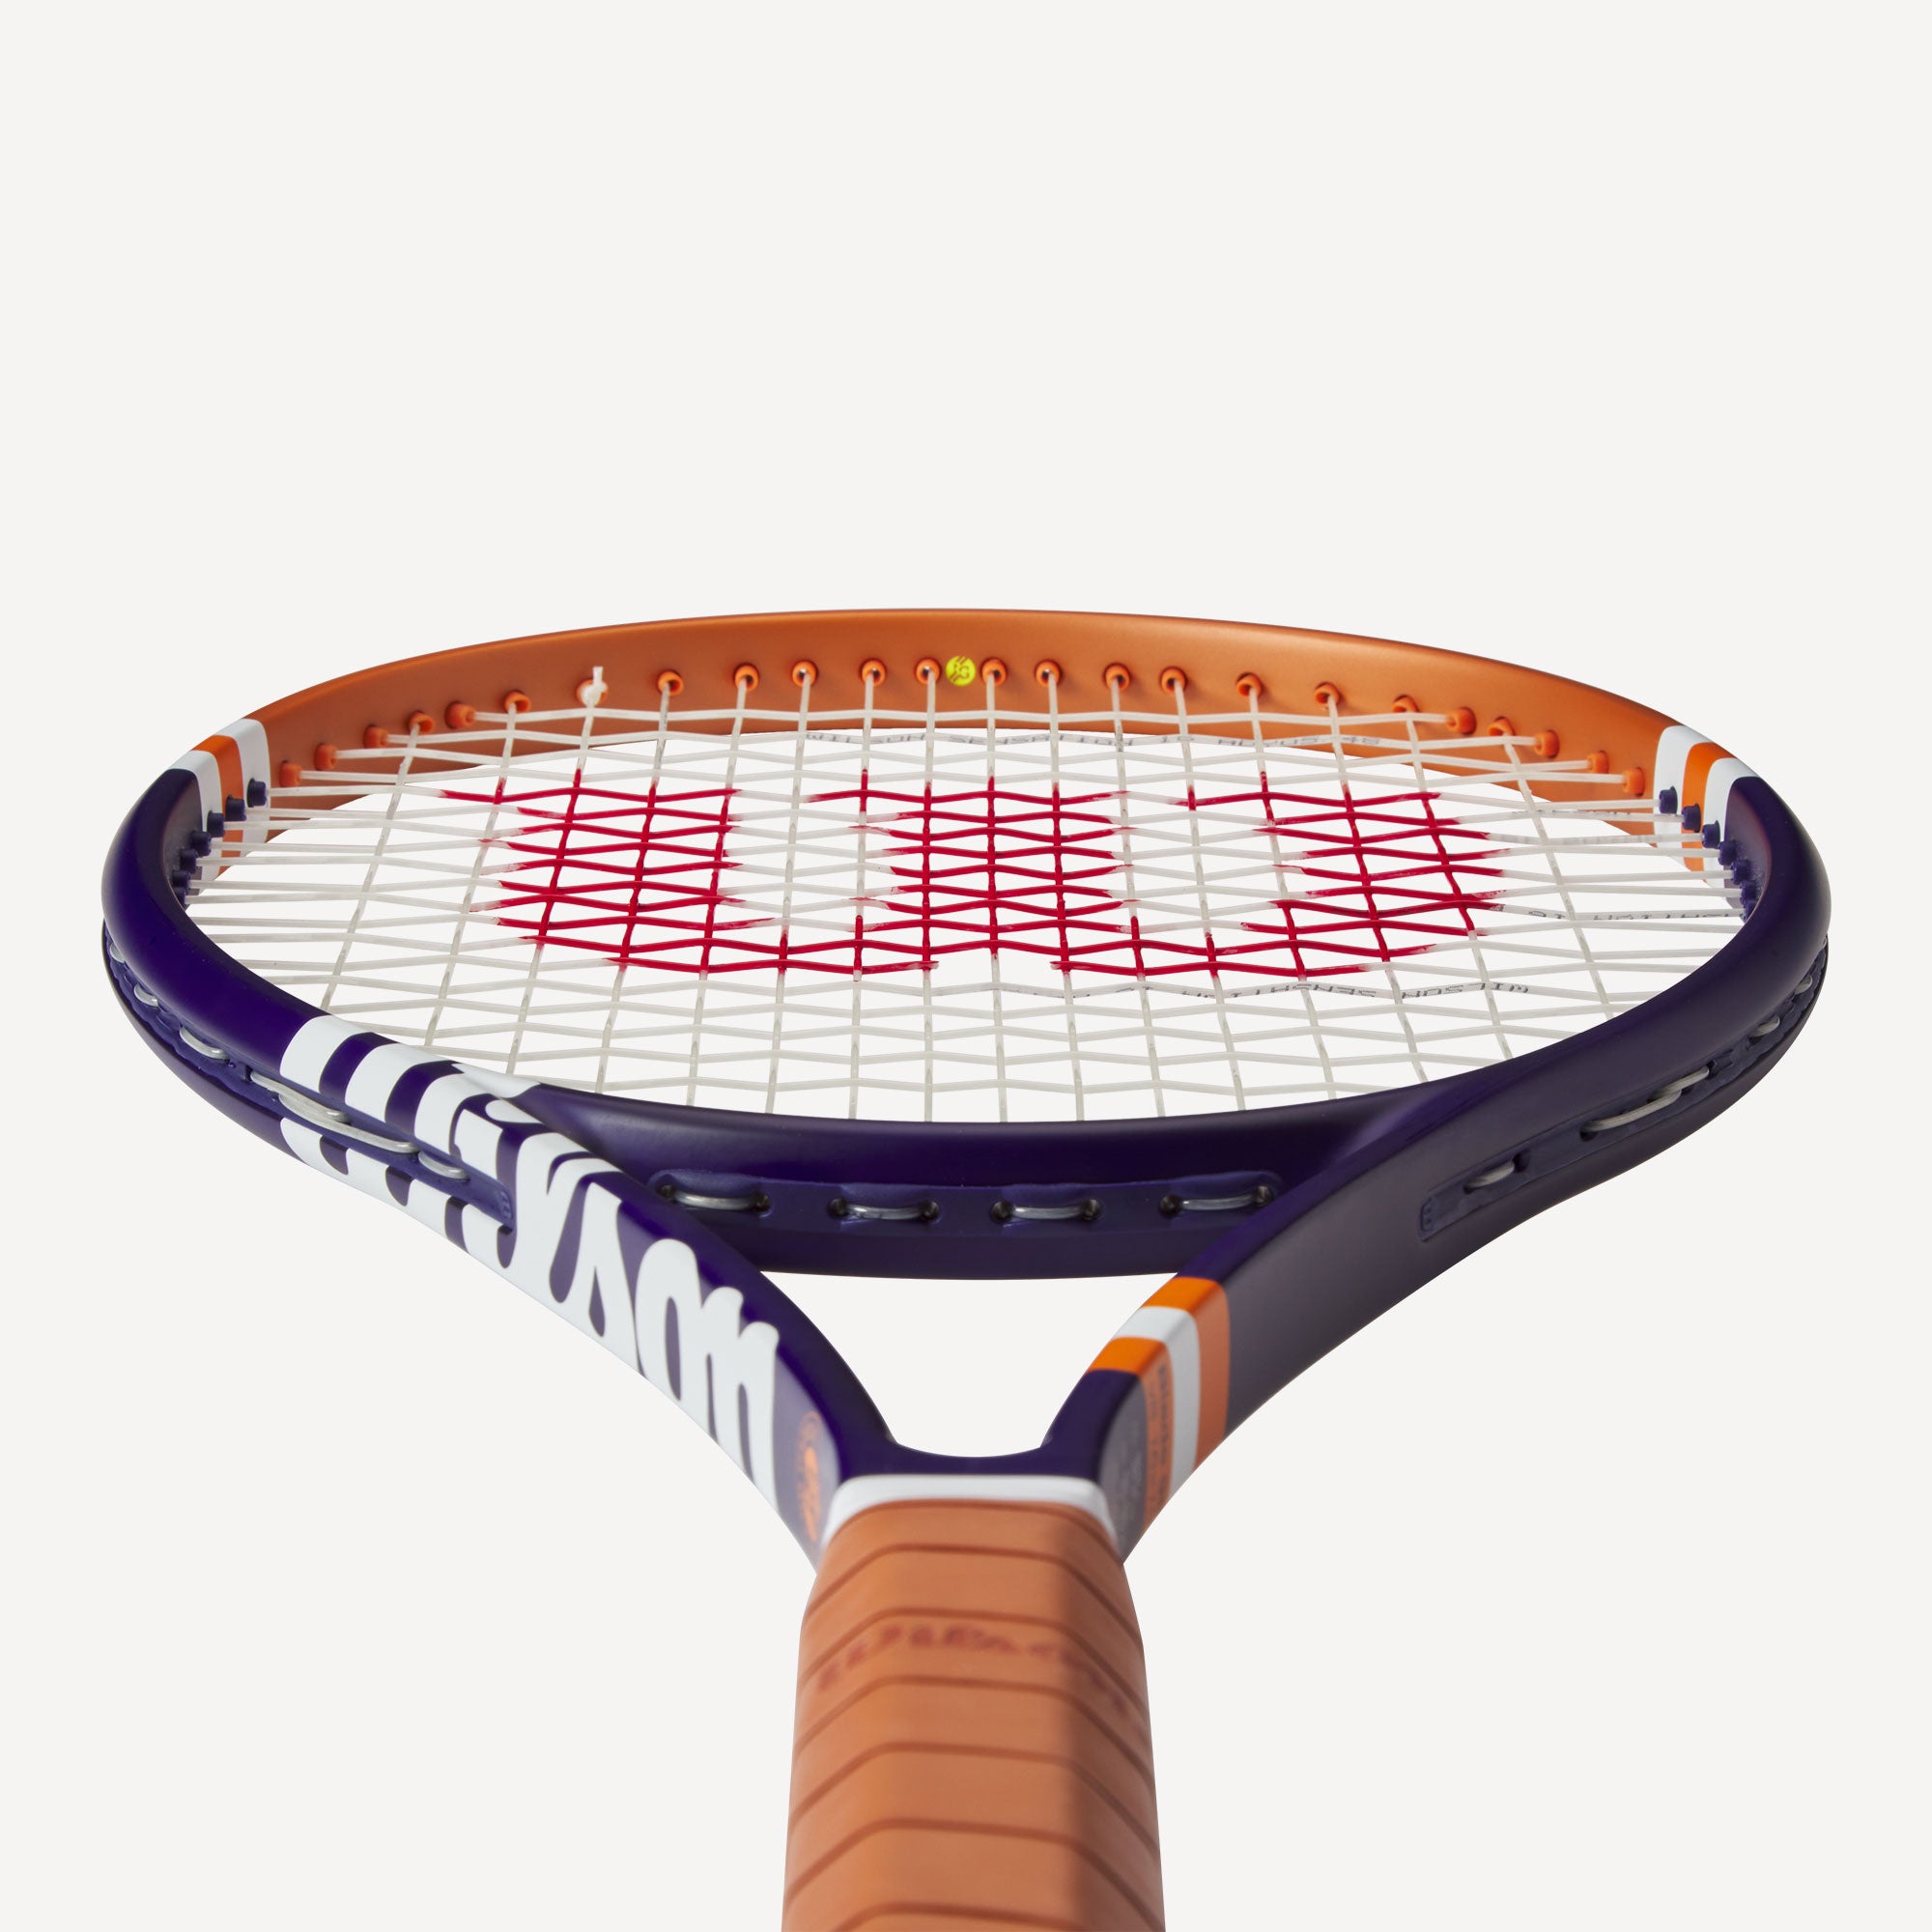 Wilson Roland-Garros Blade 98 16x19 V8 Tennis Racket (4)